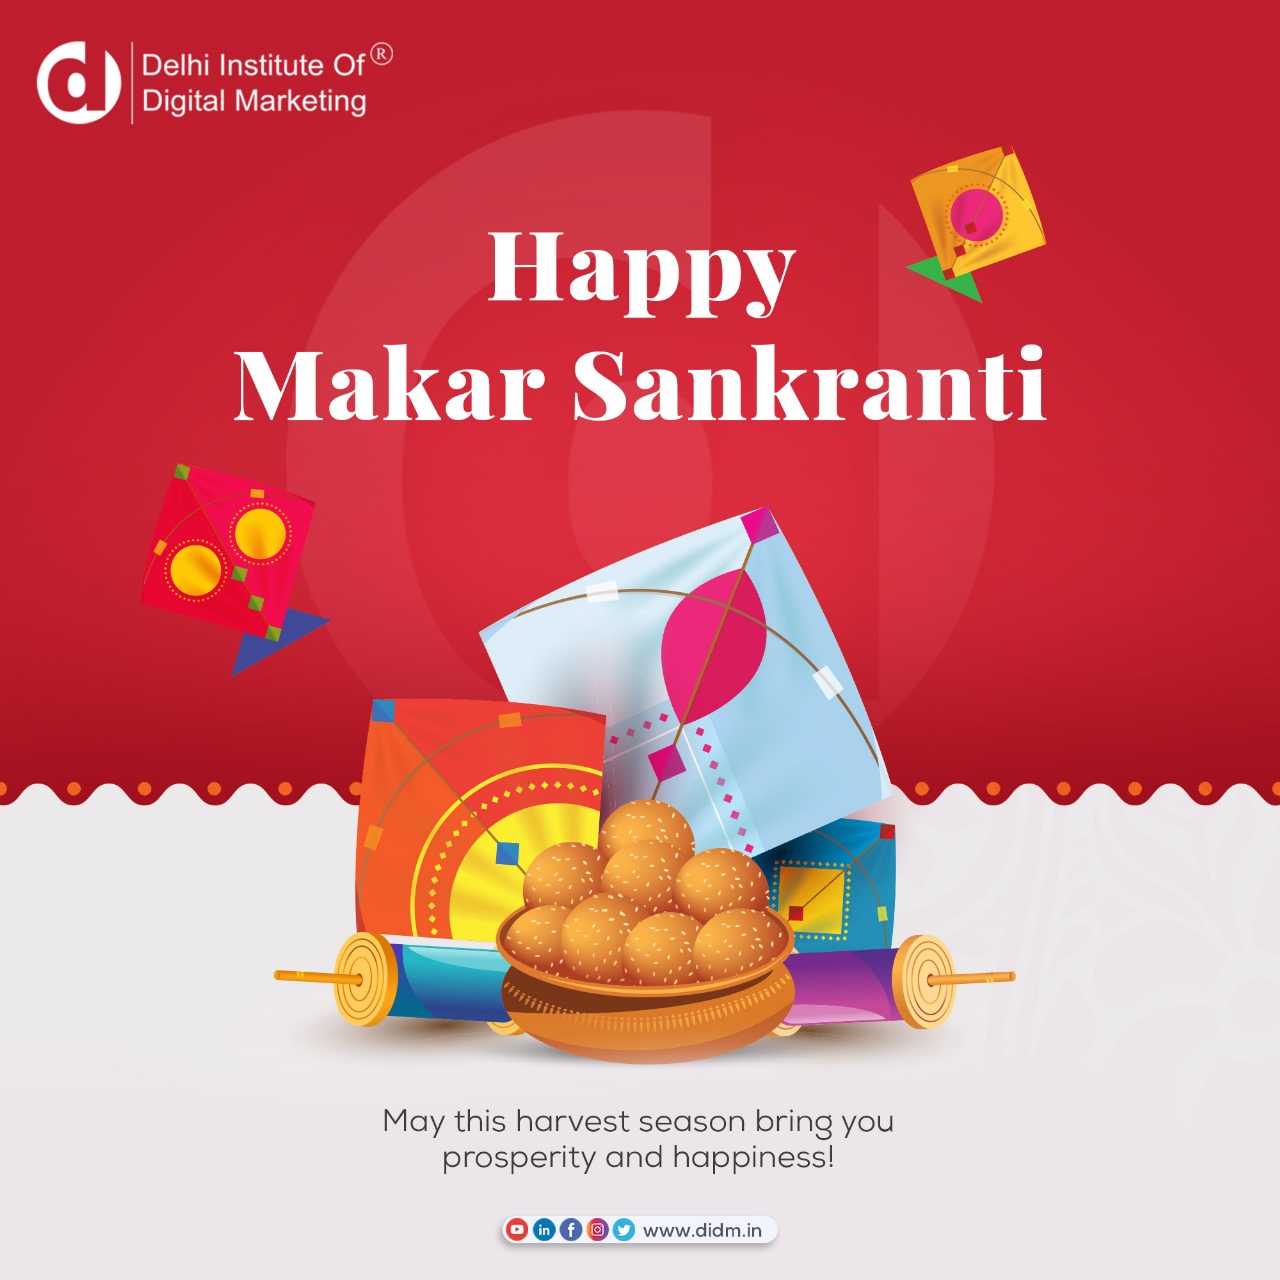 DIDM Wishes You A Very Happy Makar Sankranti